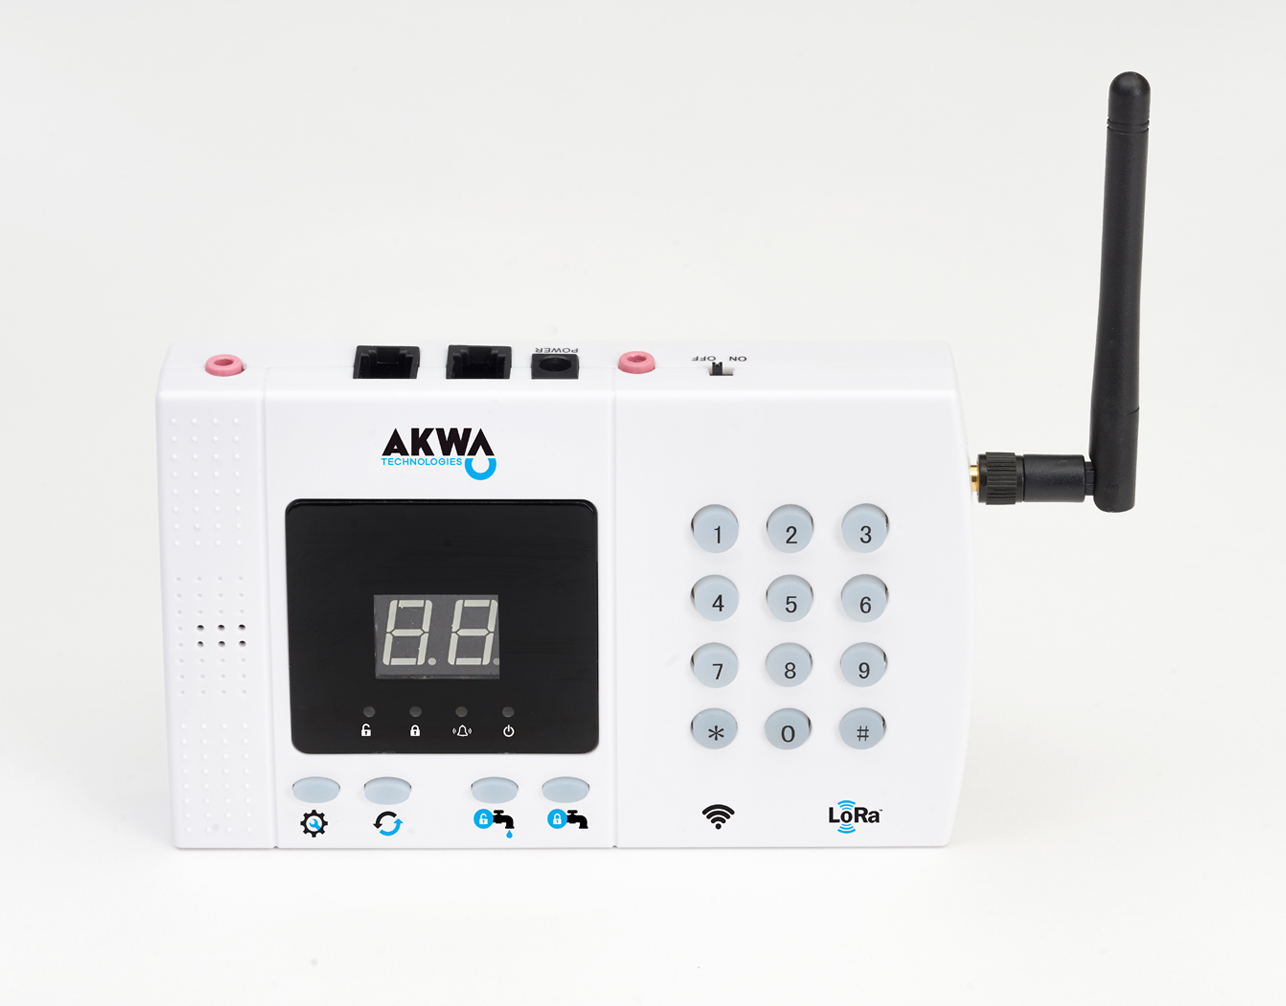 The AKWA Water Alarm controller